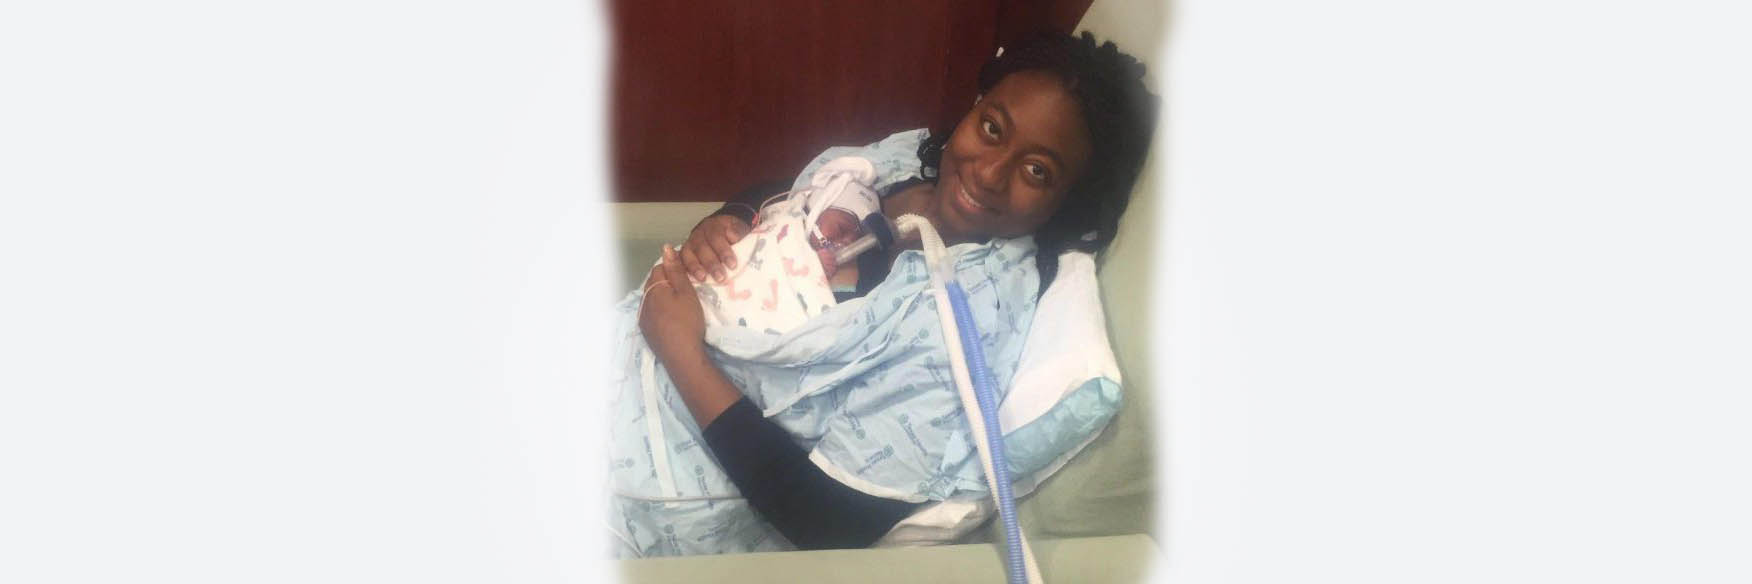 New mom holding 2 newborns in the Neonatal intensive Care Unit